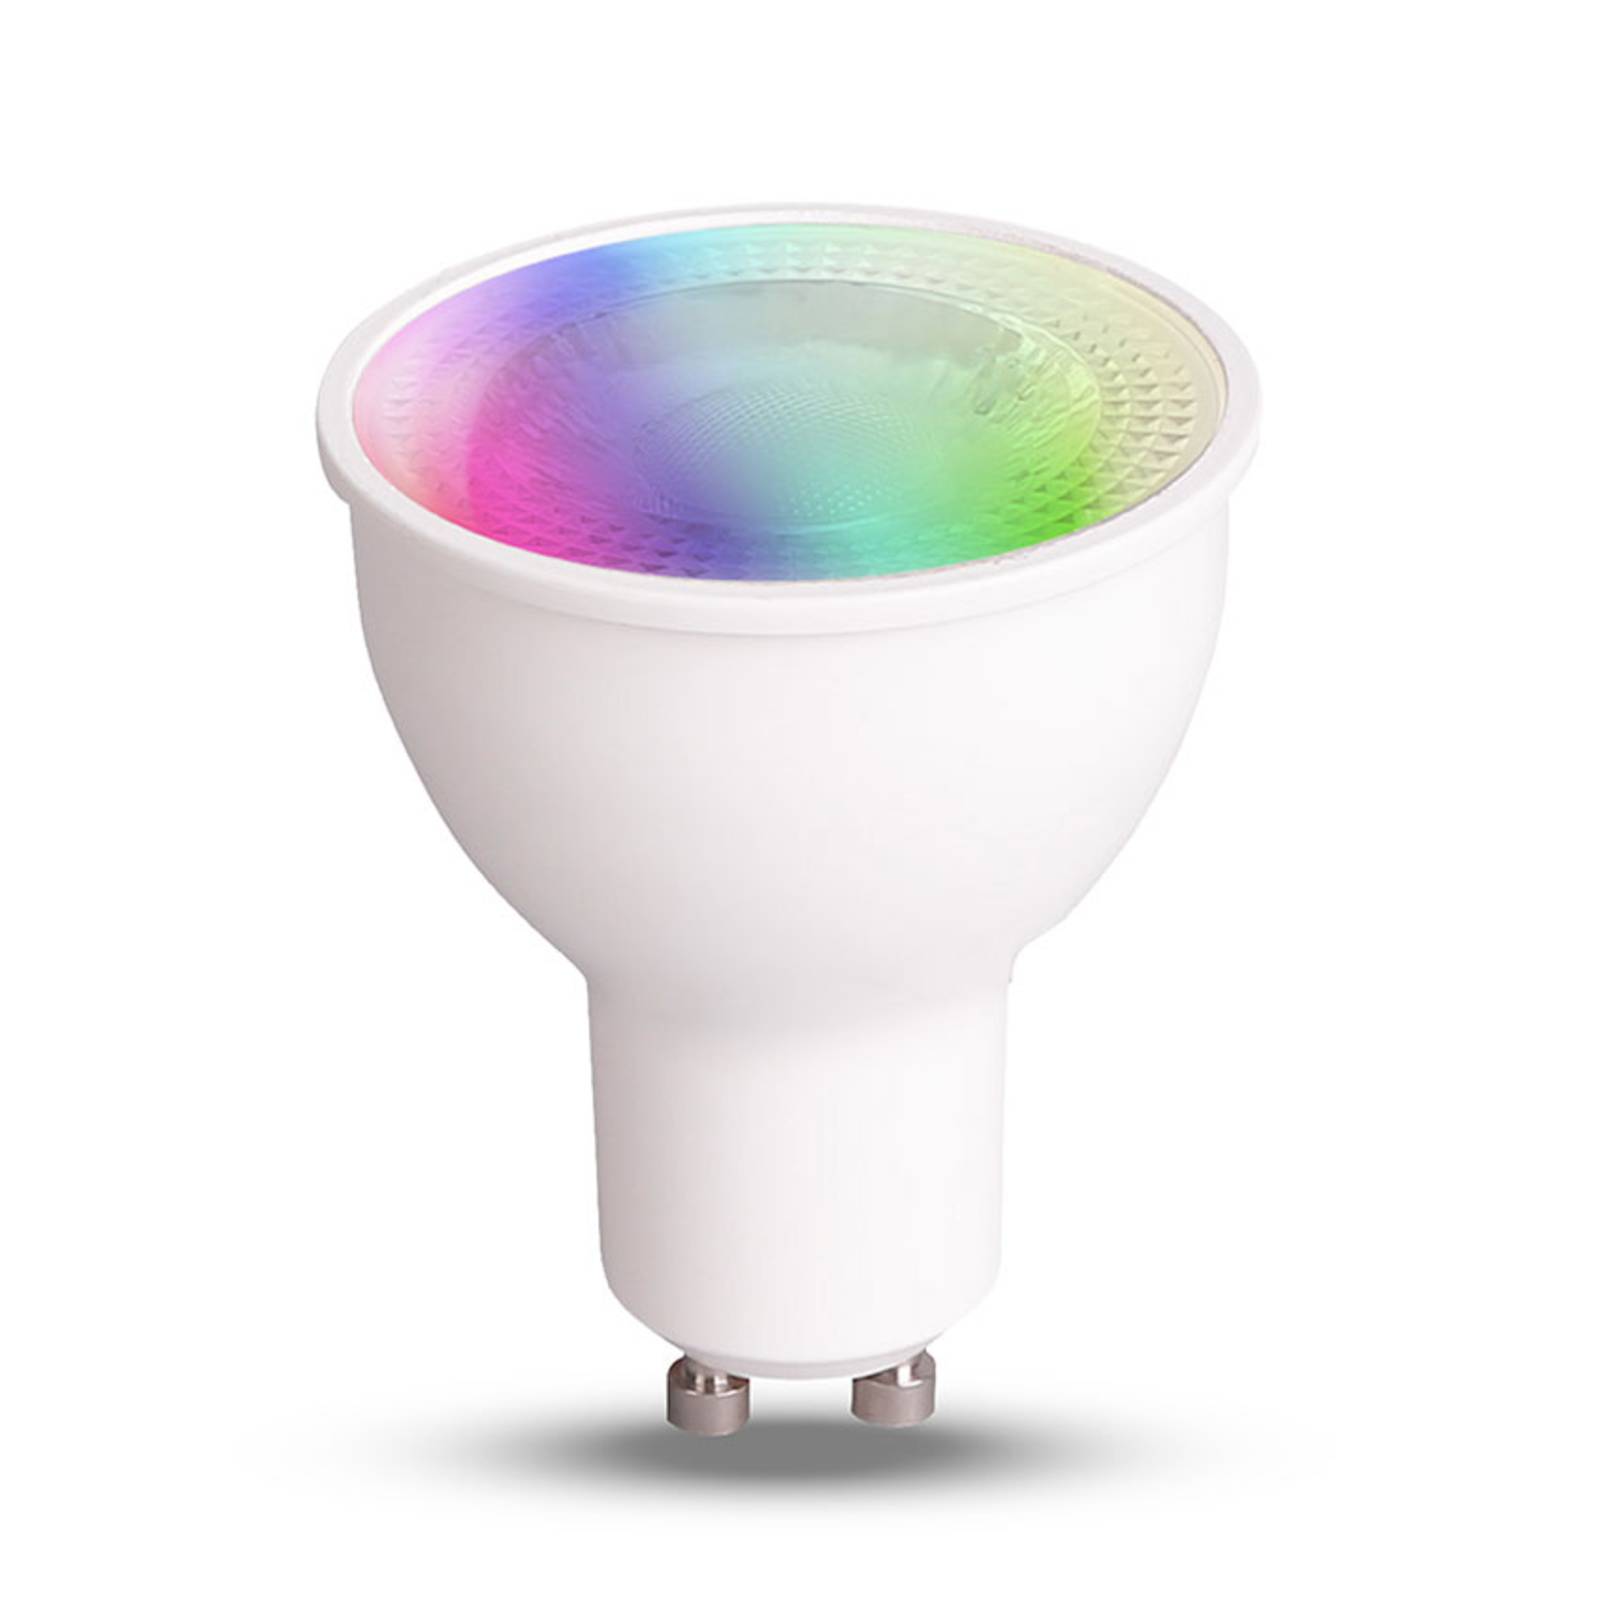 Müller Licht tint fehér+színes LED GU10 6W 350lm